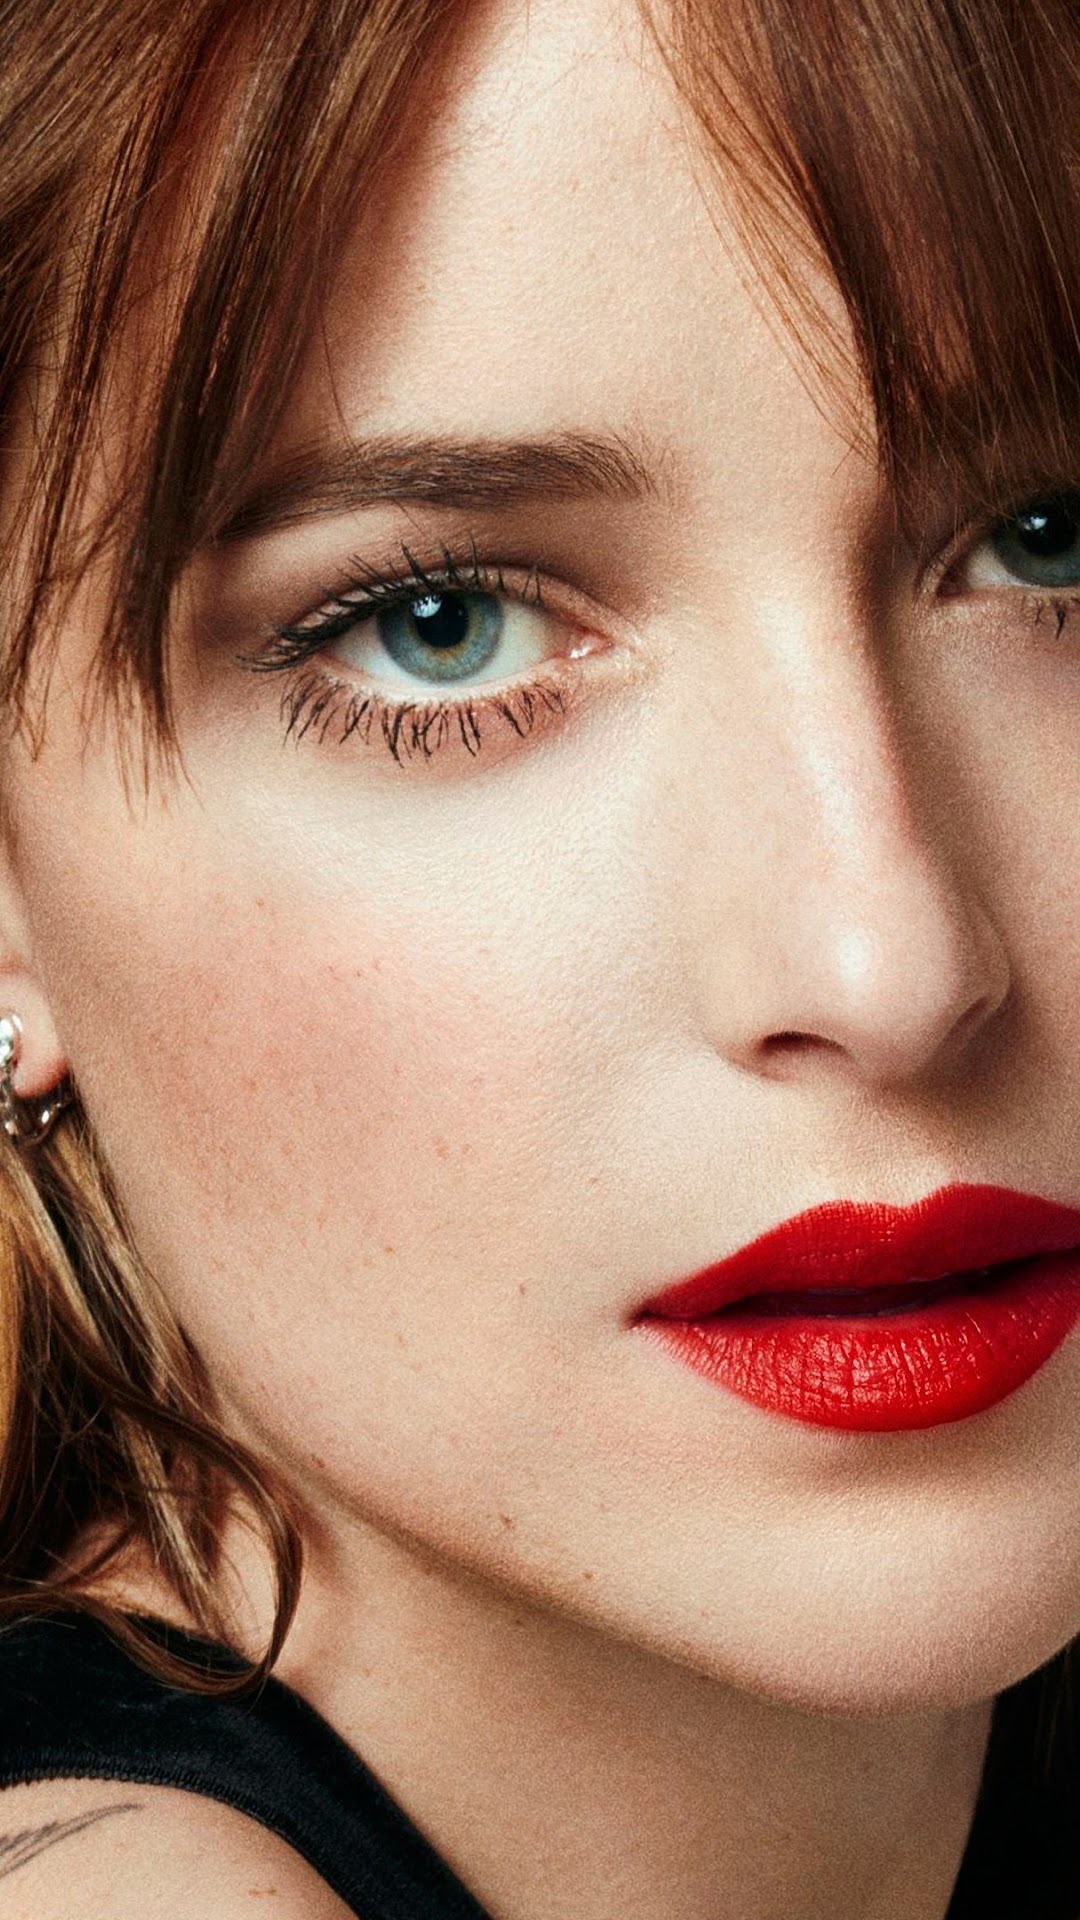 Dakota Johnson Actress Photoshoot 2018 Wallpapers